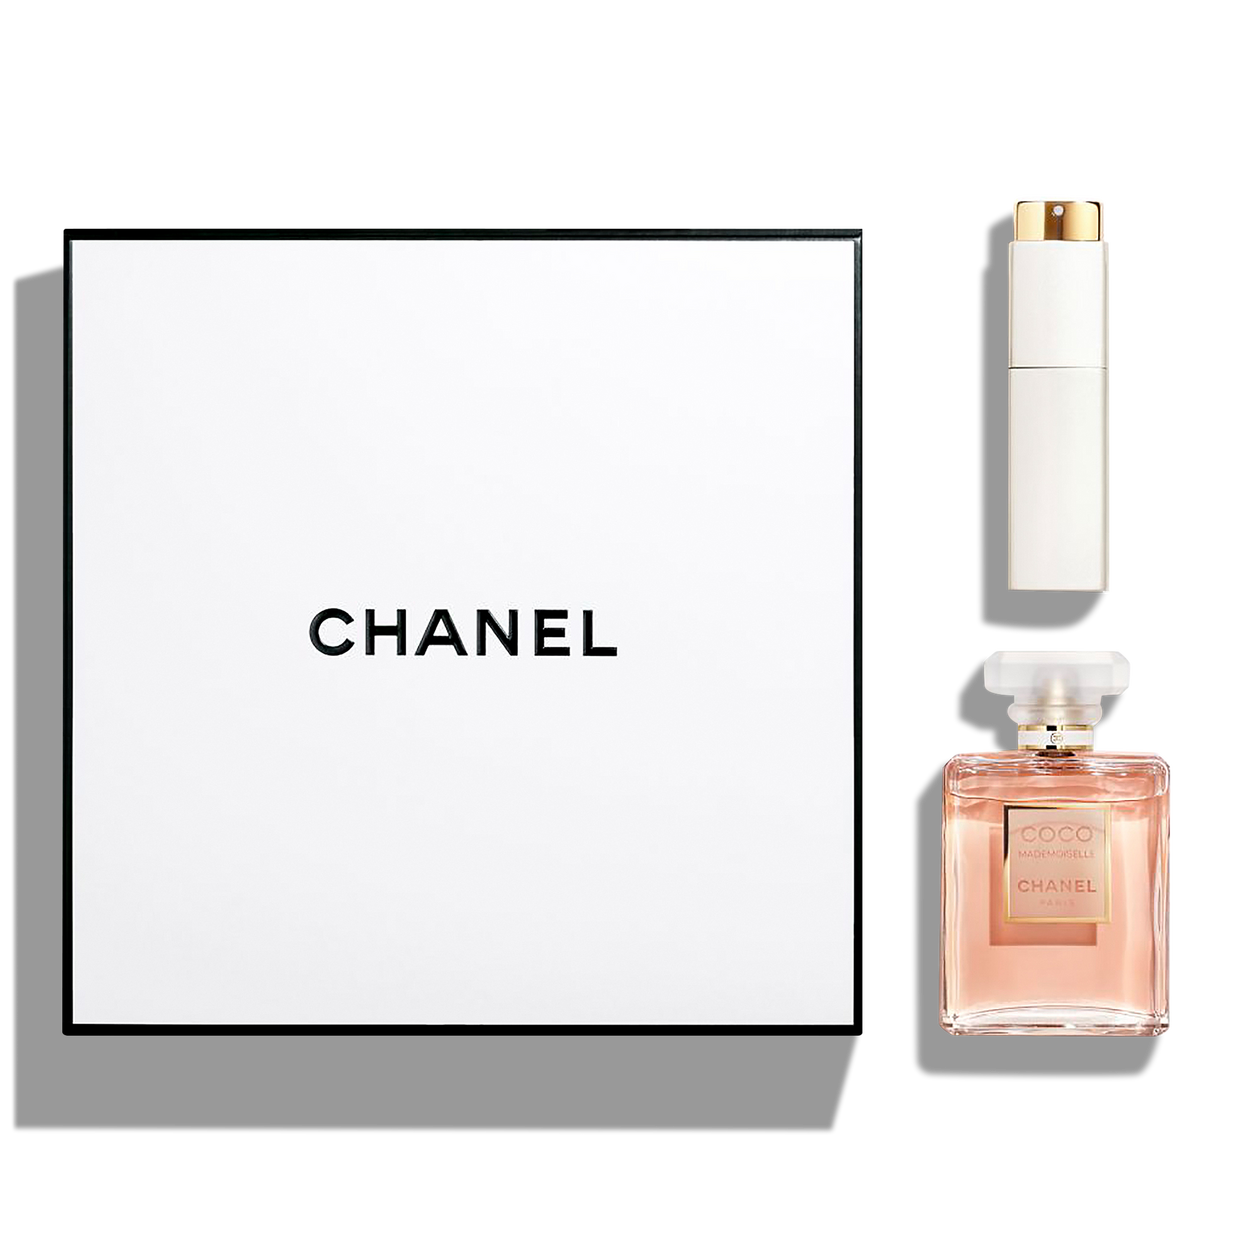 CHANEL Receive a Complimentary COCO MADEMOISELLE Eau de Parfum